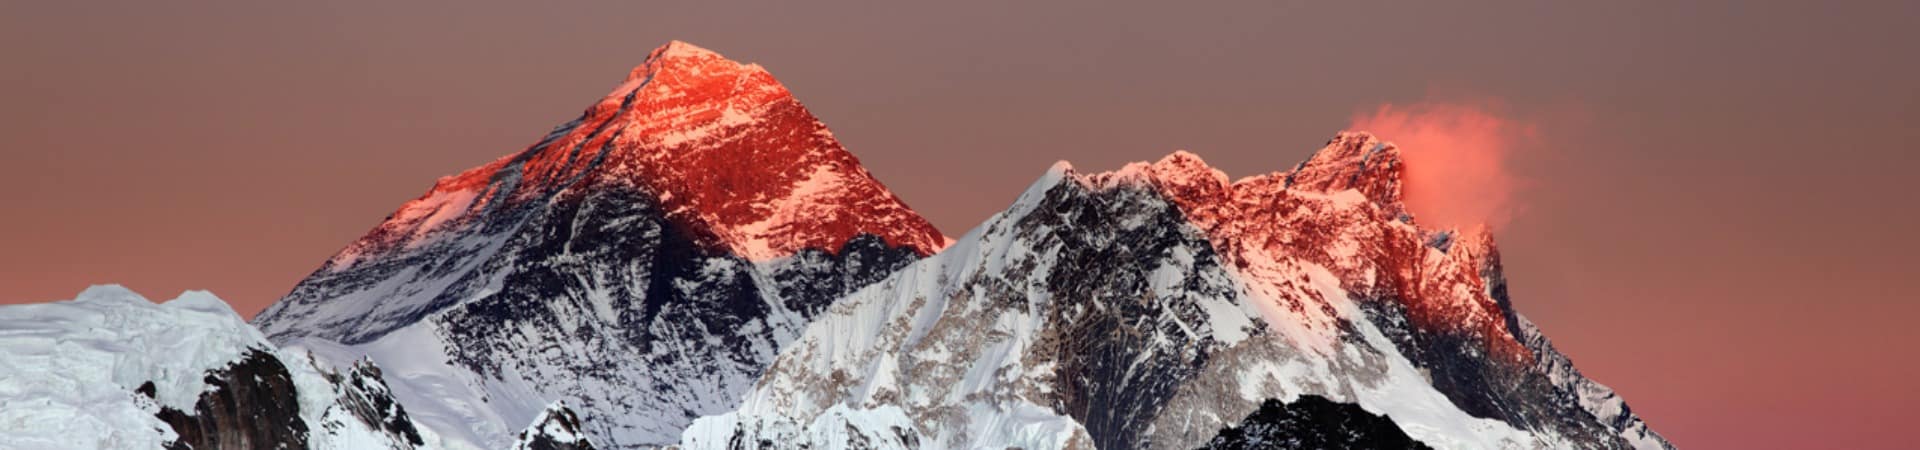 Ponto turístico Monte Everest, Himalaia turismo Nepal